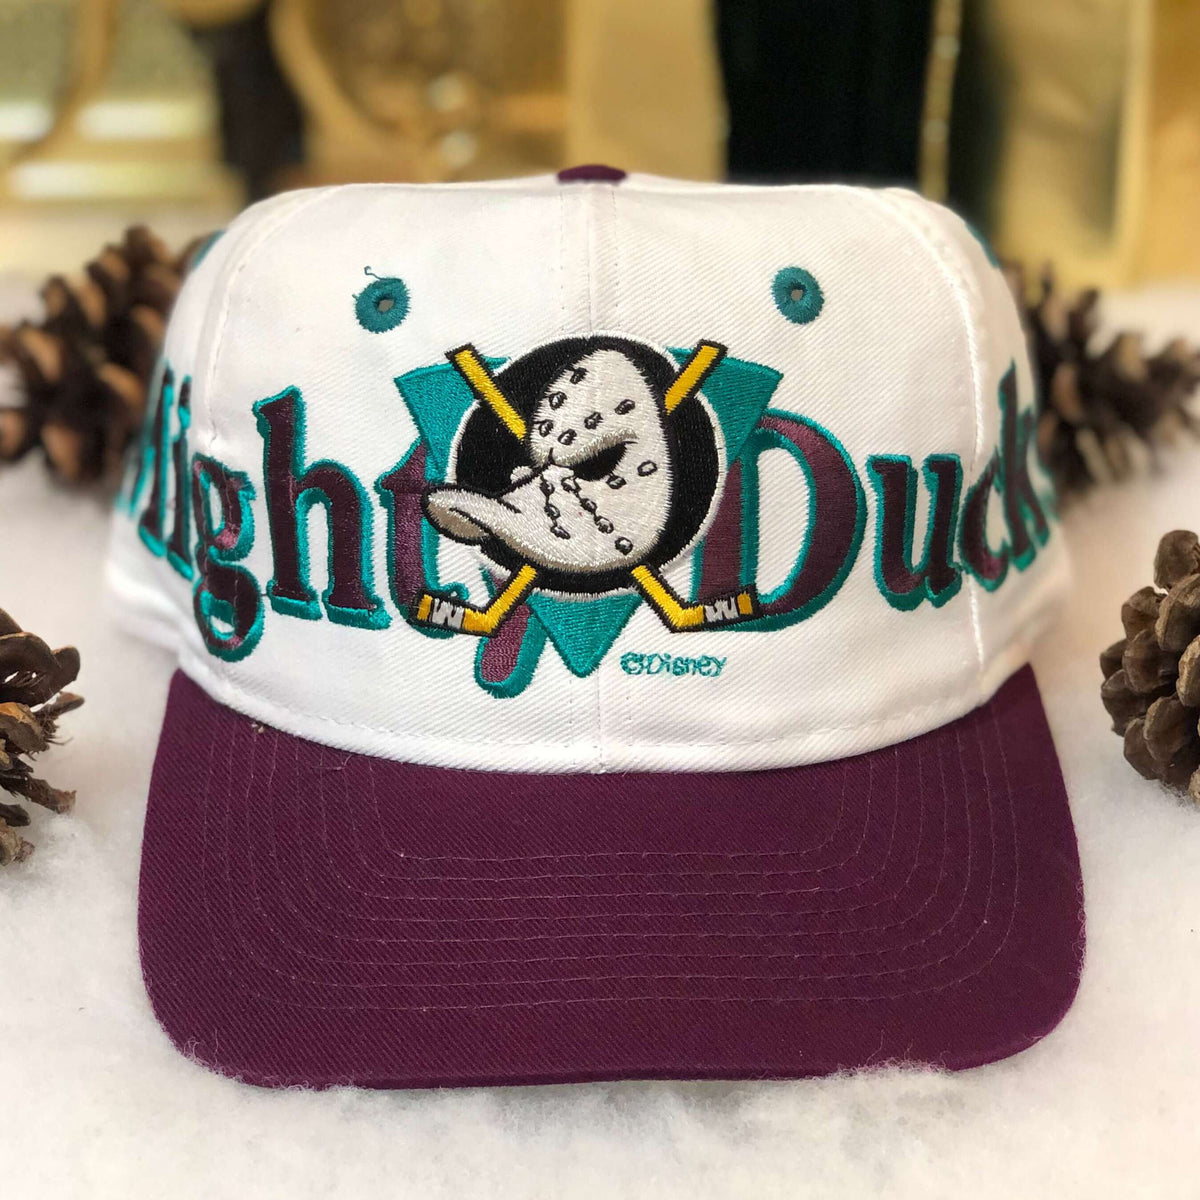 Vintage The Game Anaheim Mighty Ducks Snapback Cap Hat